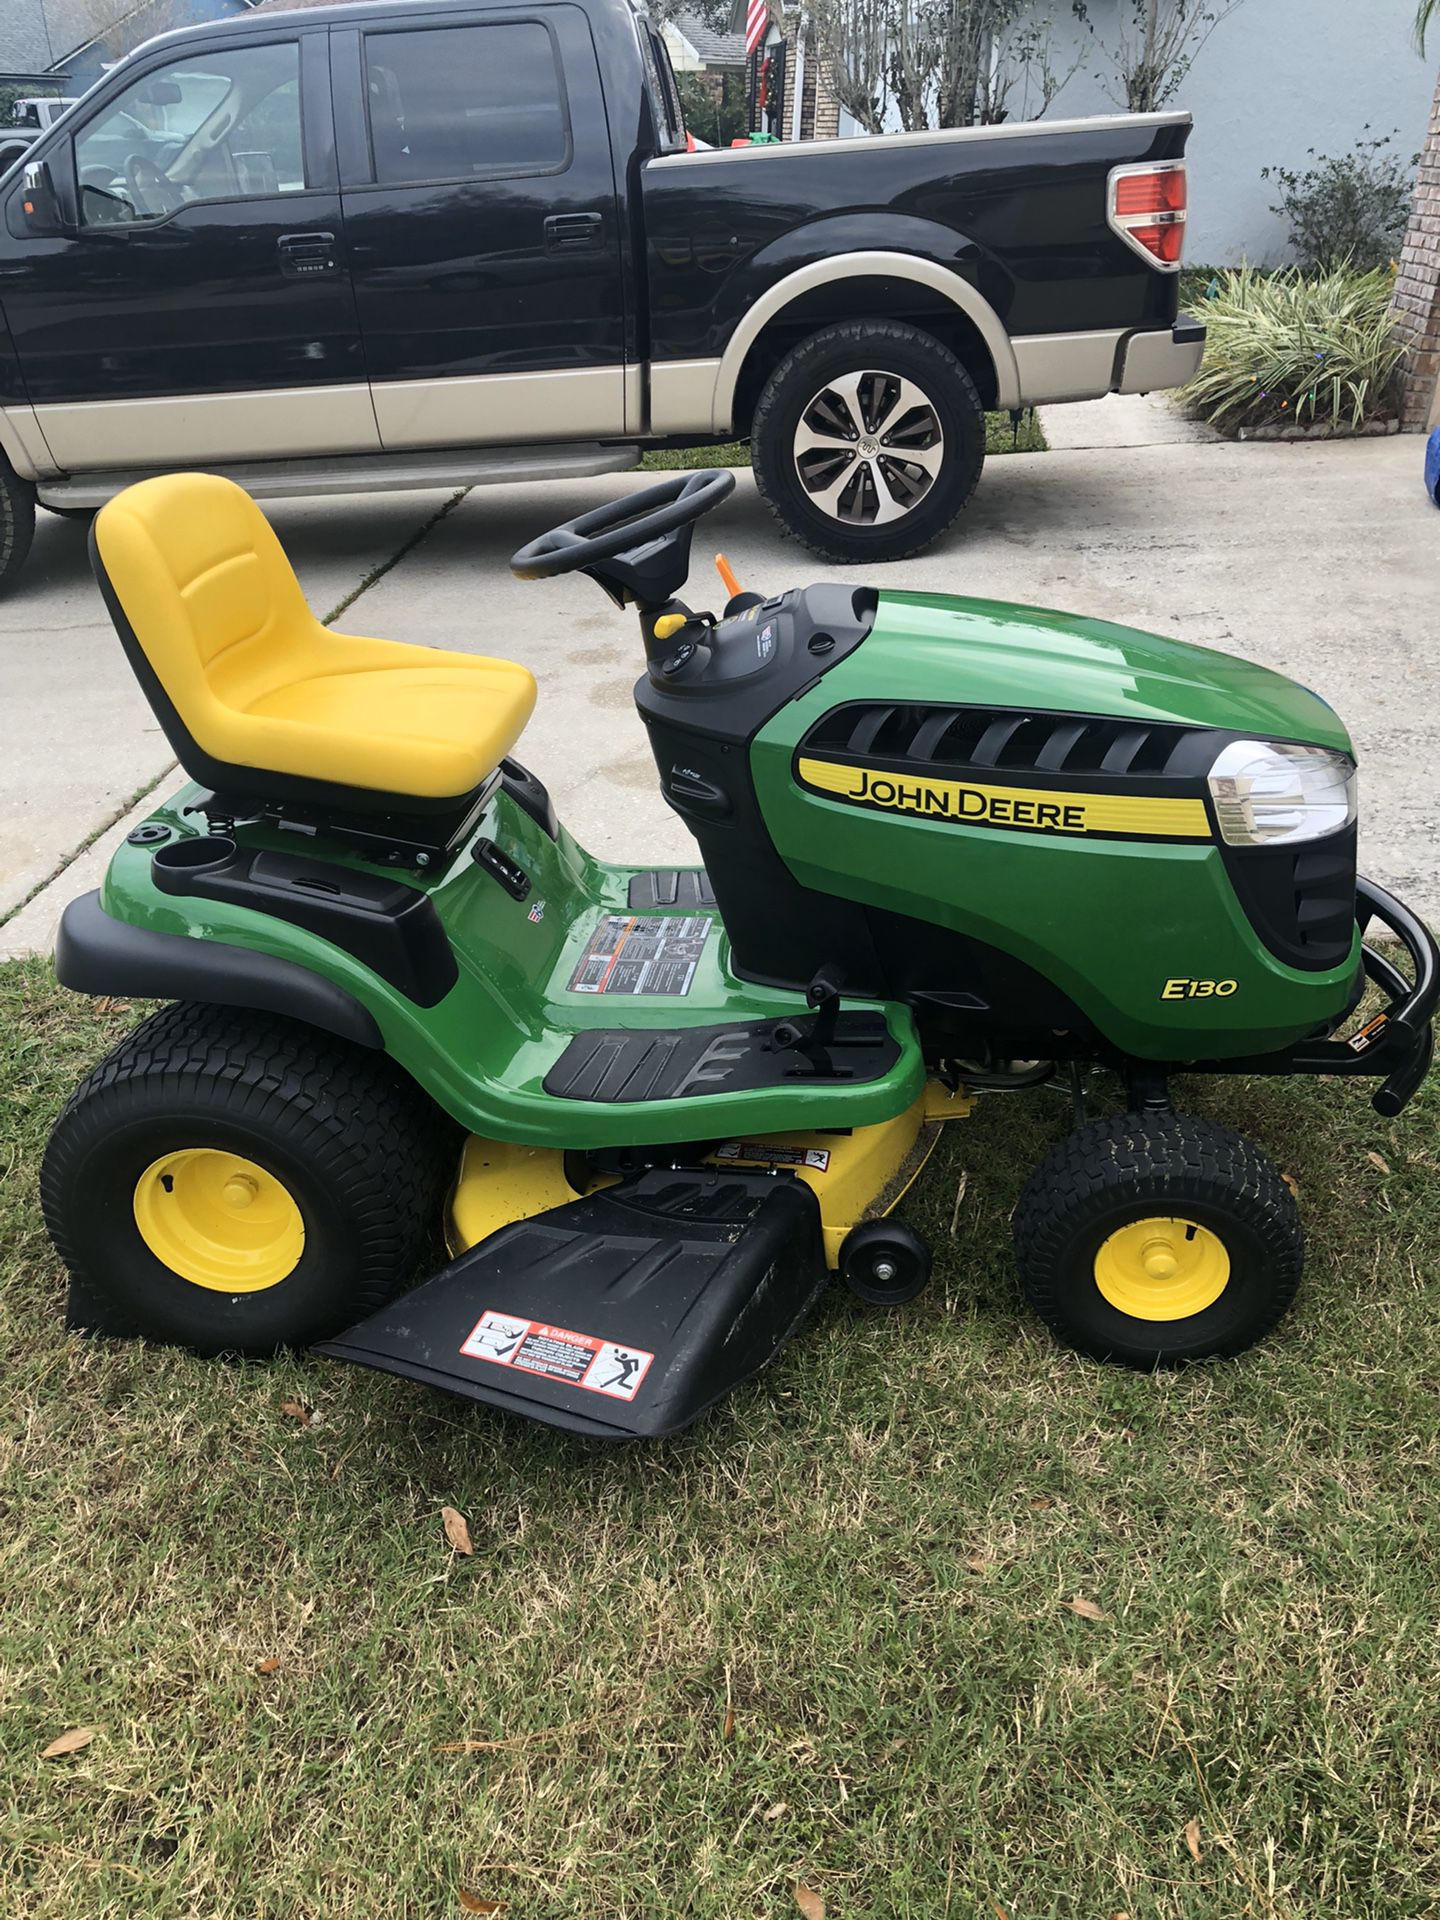 2019 John Deere 42 inch 22hp E130 riding lawn mower